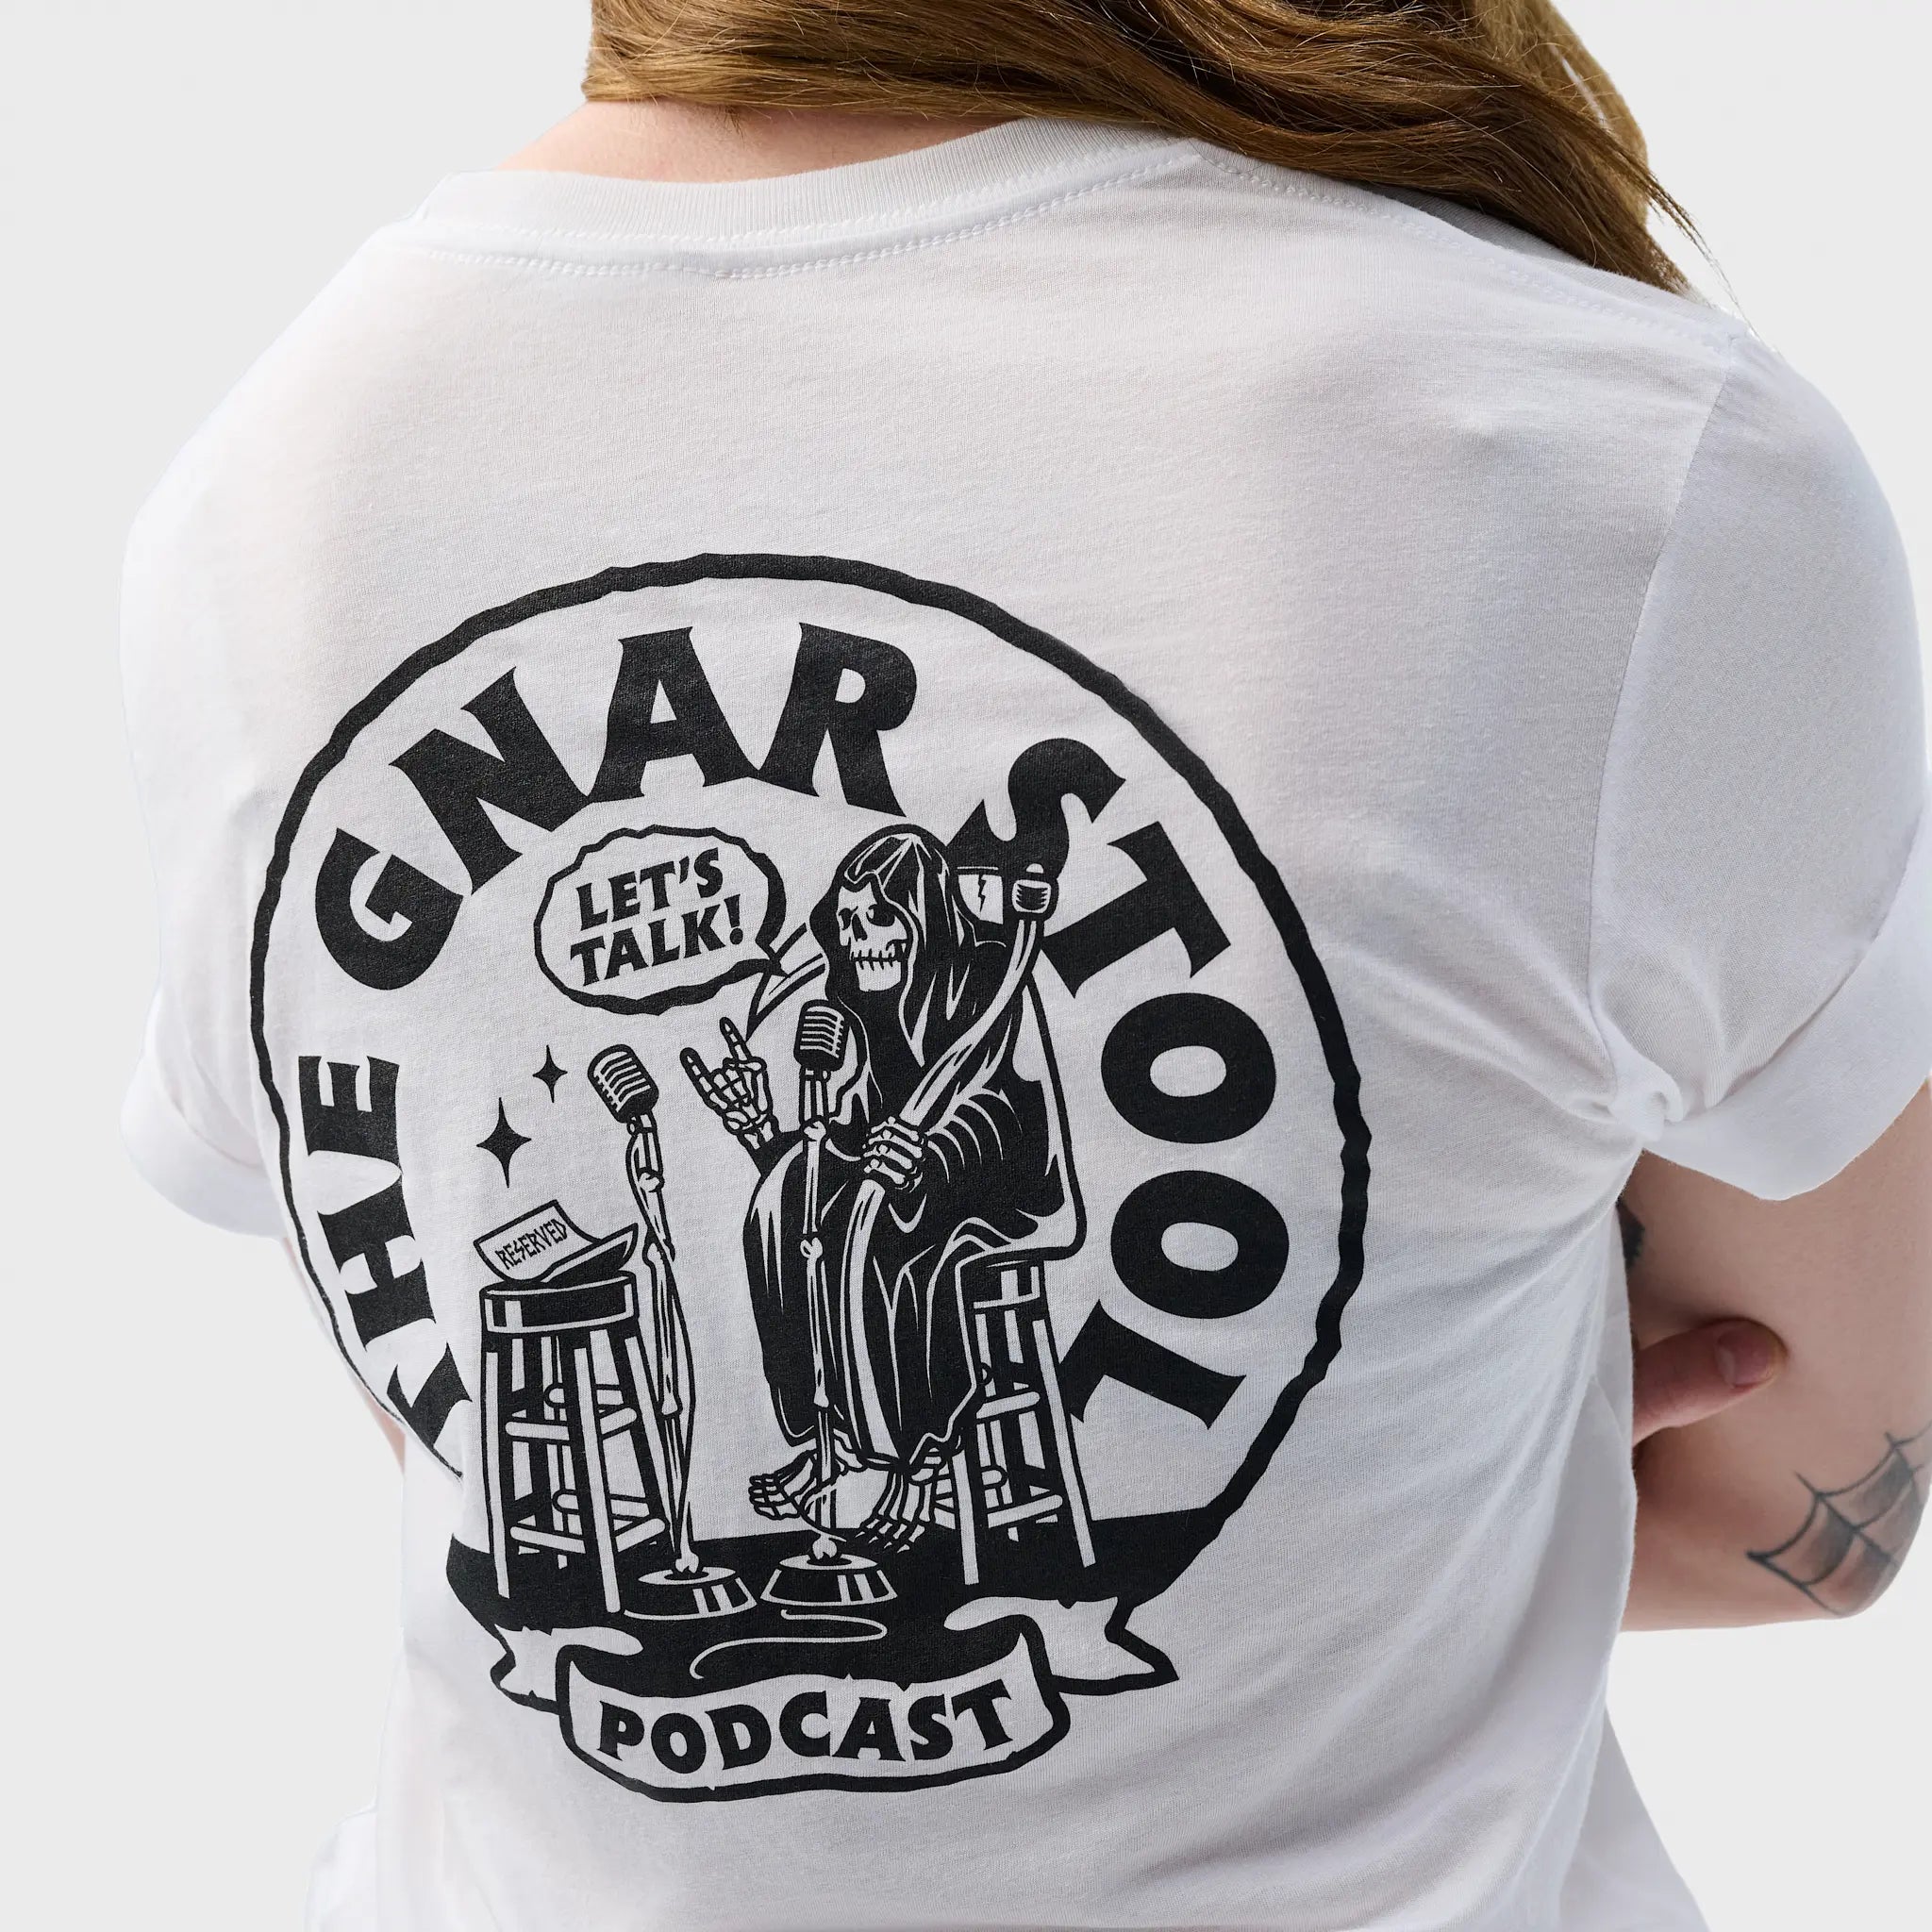 Gnar Stool Podcast Shirt - Gnarly Nutrition